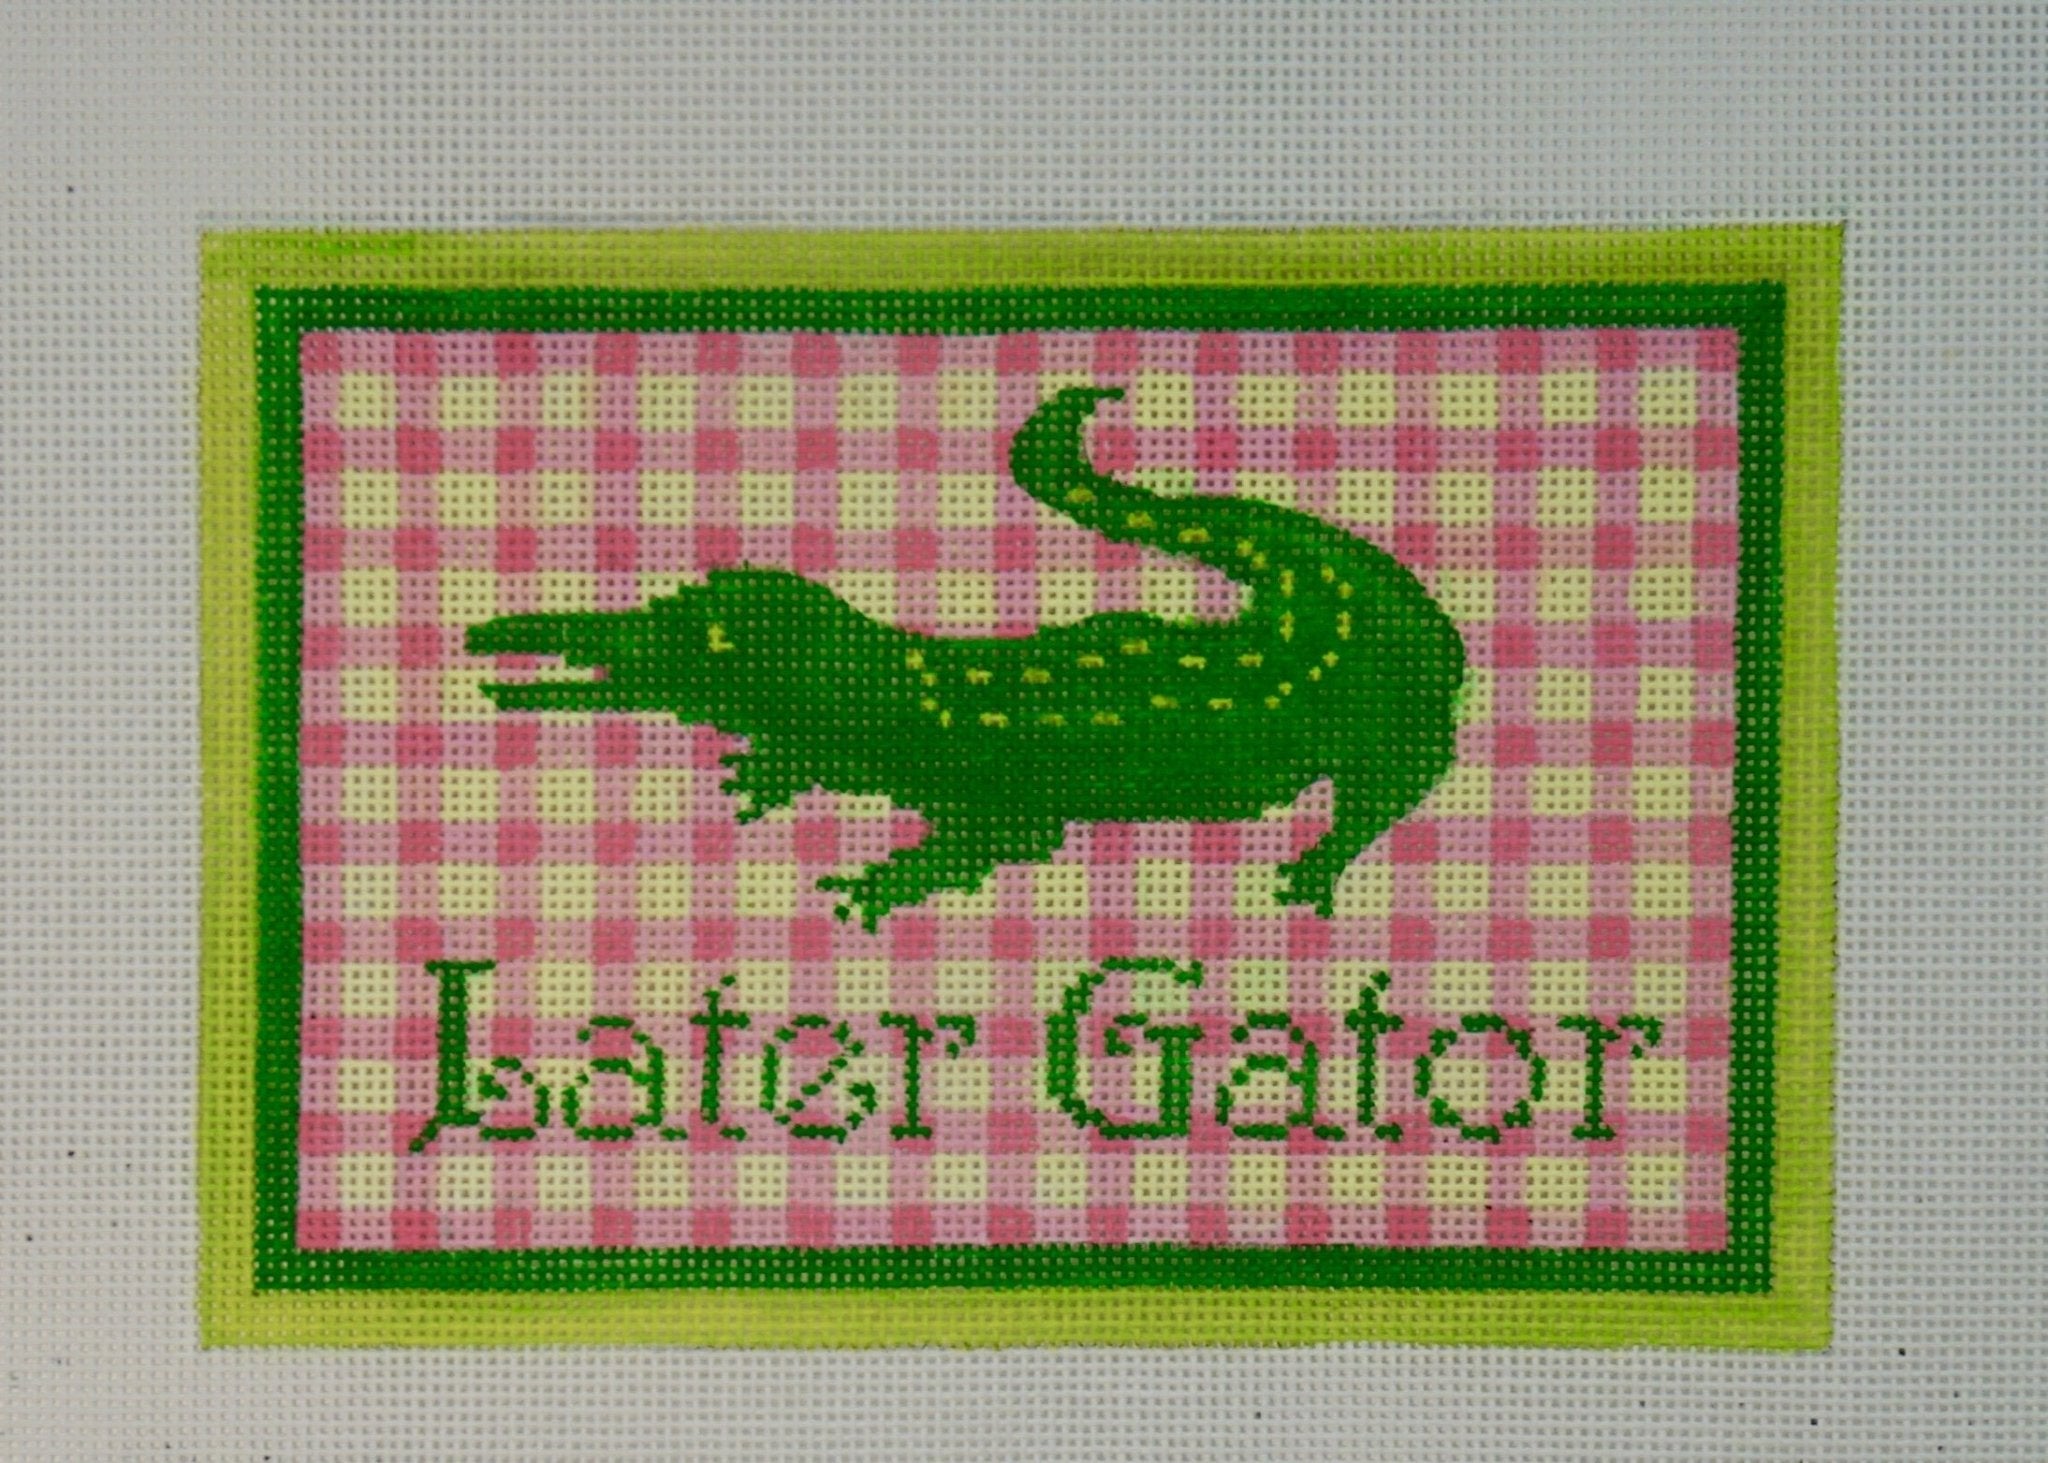 Later Gator - The Flying Needles